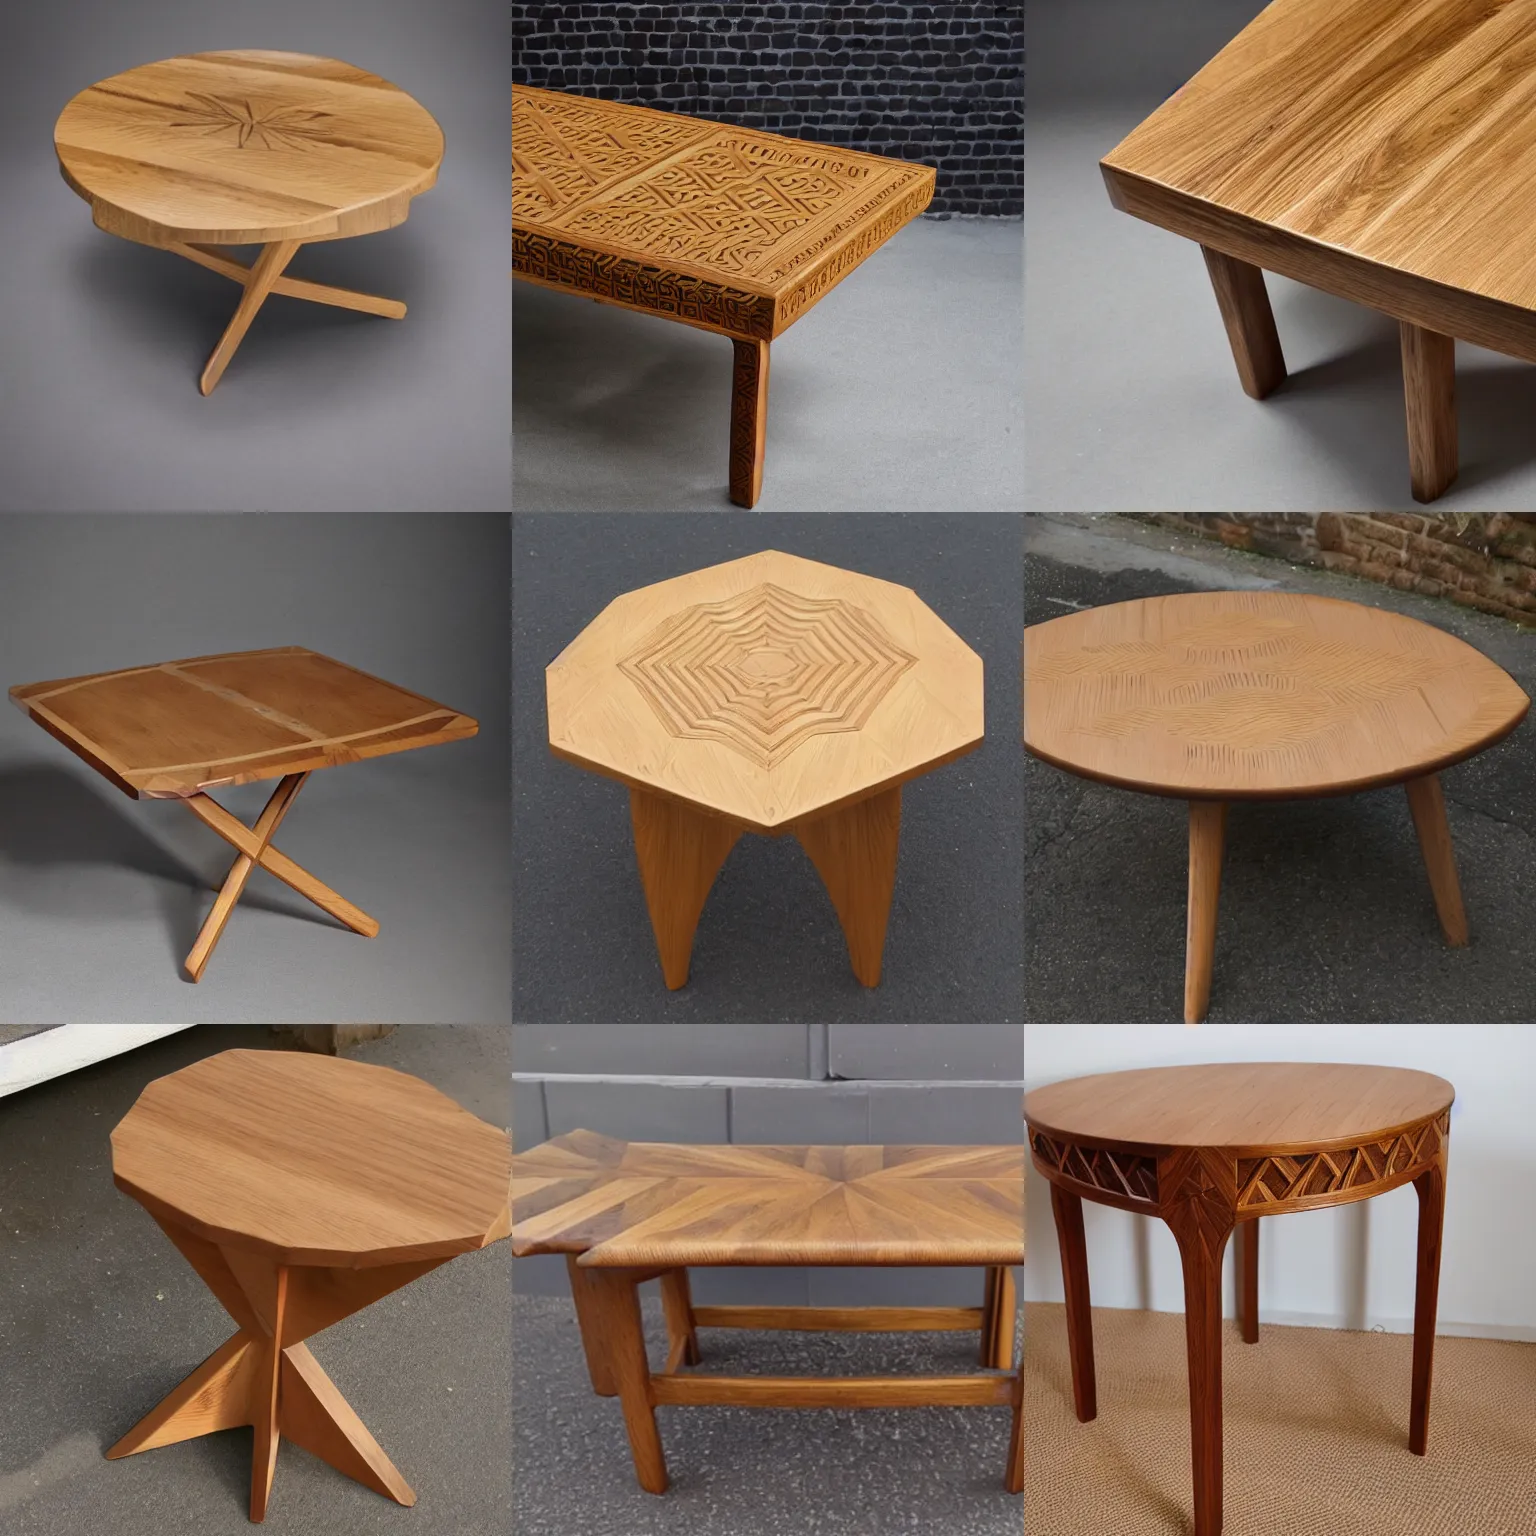 Prompt: norwegian design furniture of a wood oak table in geometric shape carved intricate